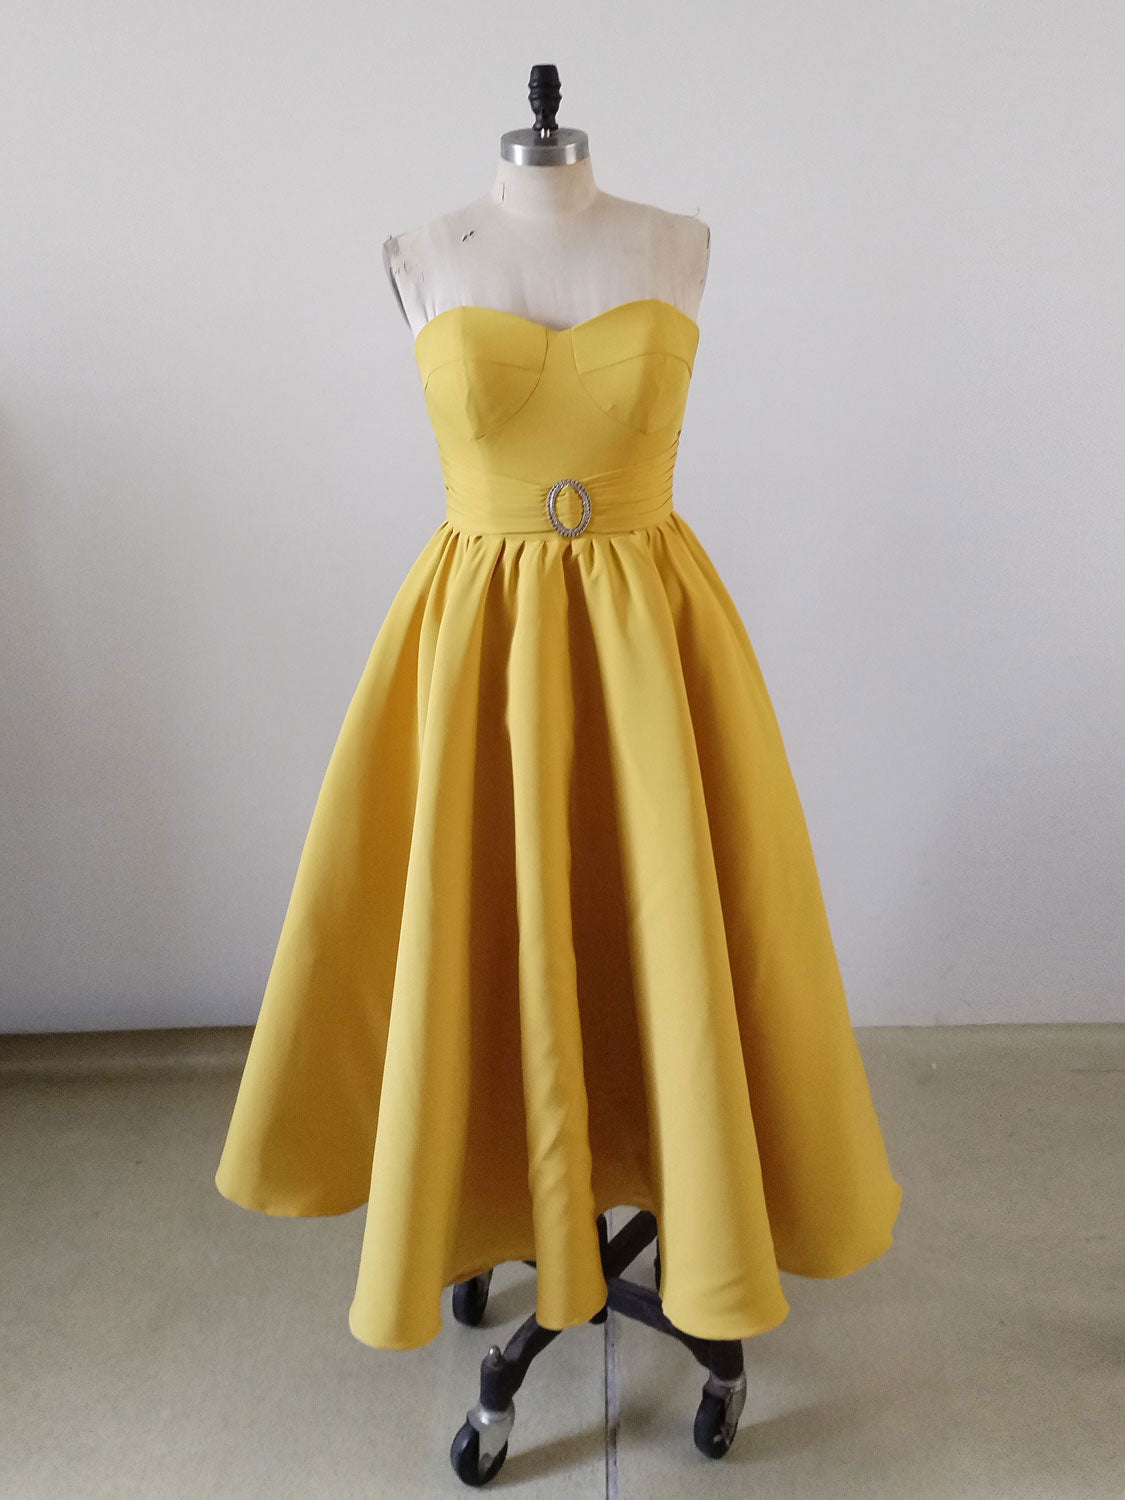 Beauty Dress Design, Yellow Sweetheart Neck Satin Tea Length Prom Dress, Yellow Formal Dress